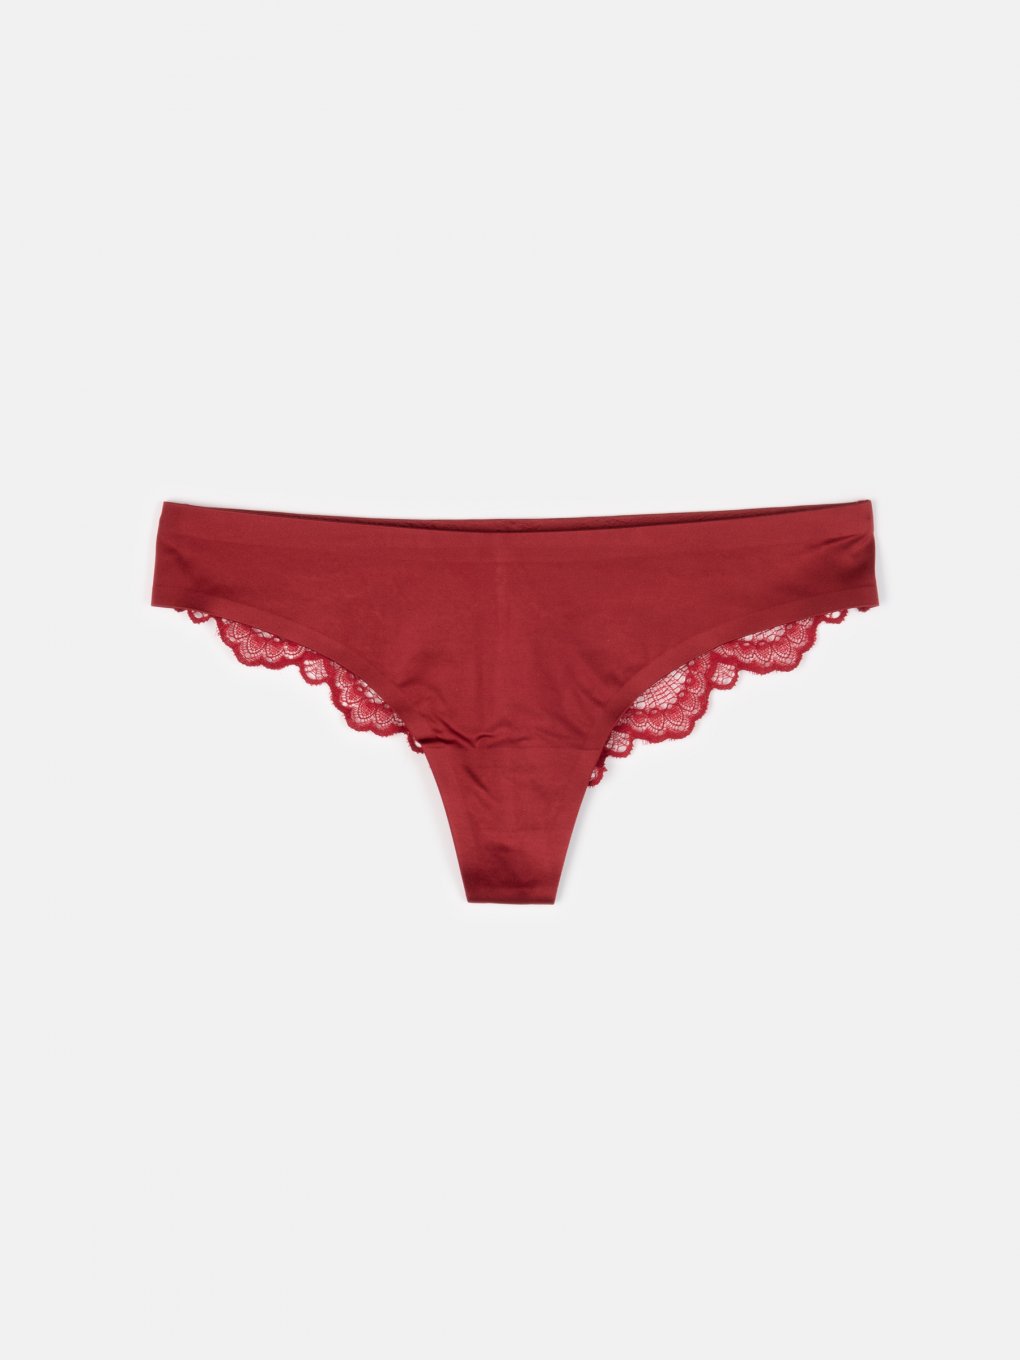 Lace thong panties